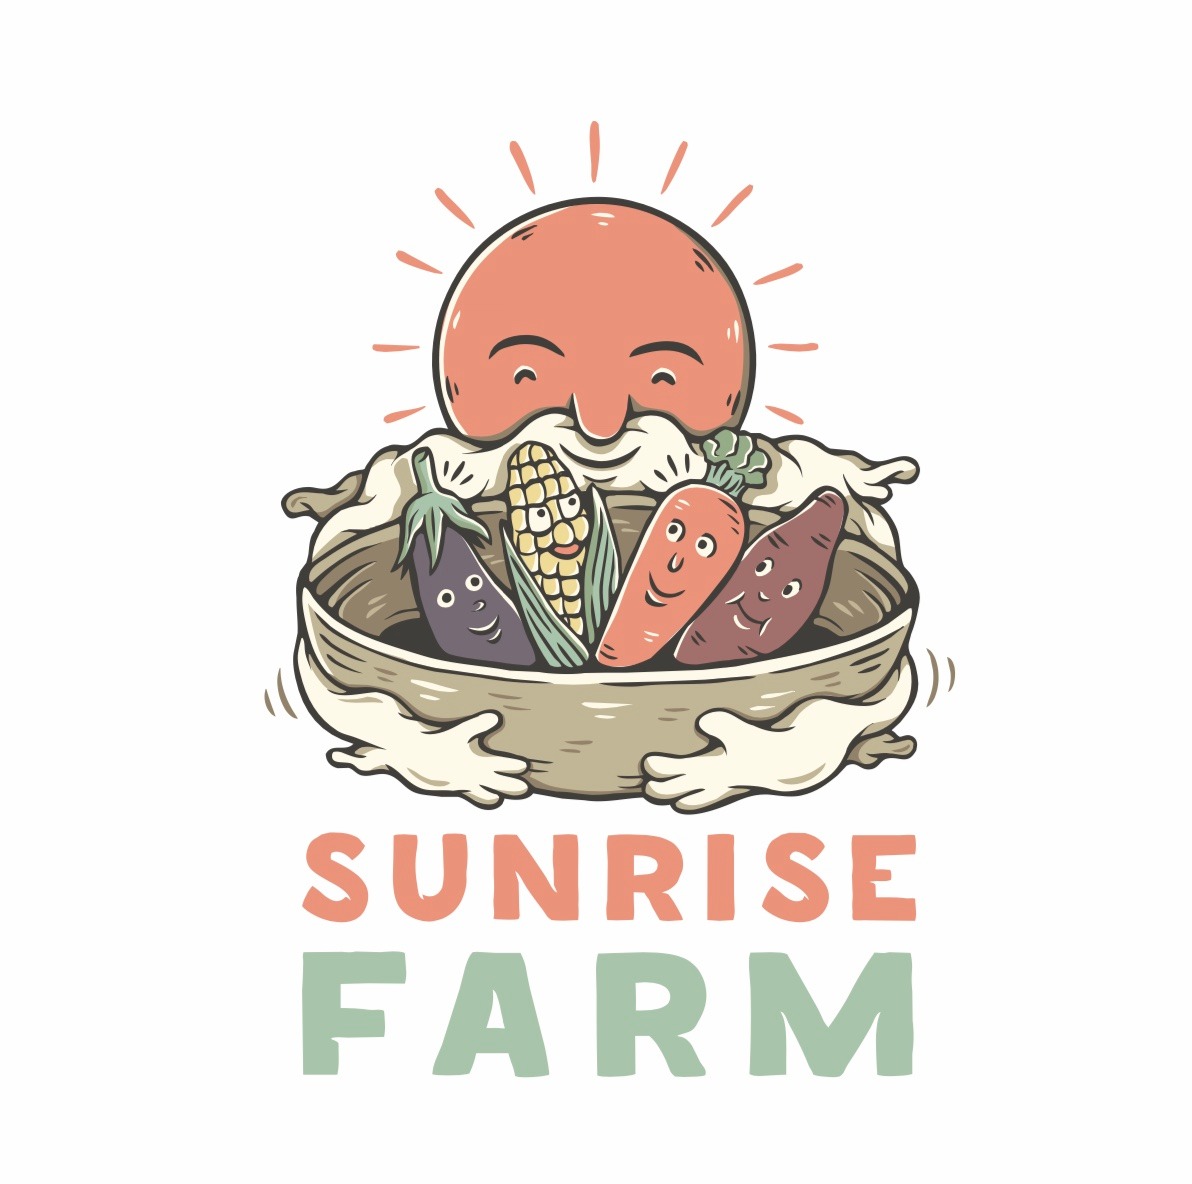 Sunrise farm